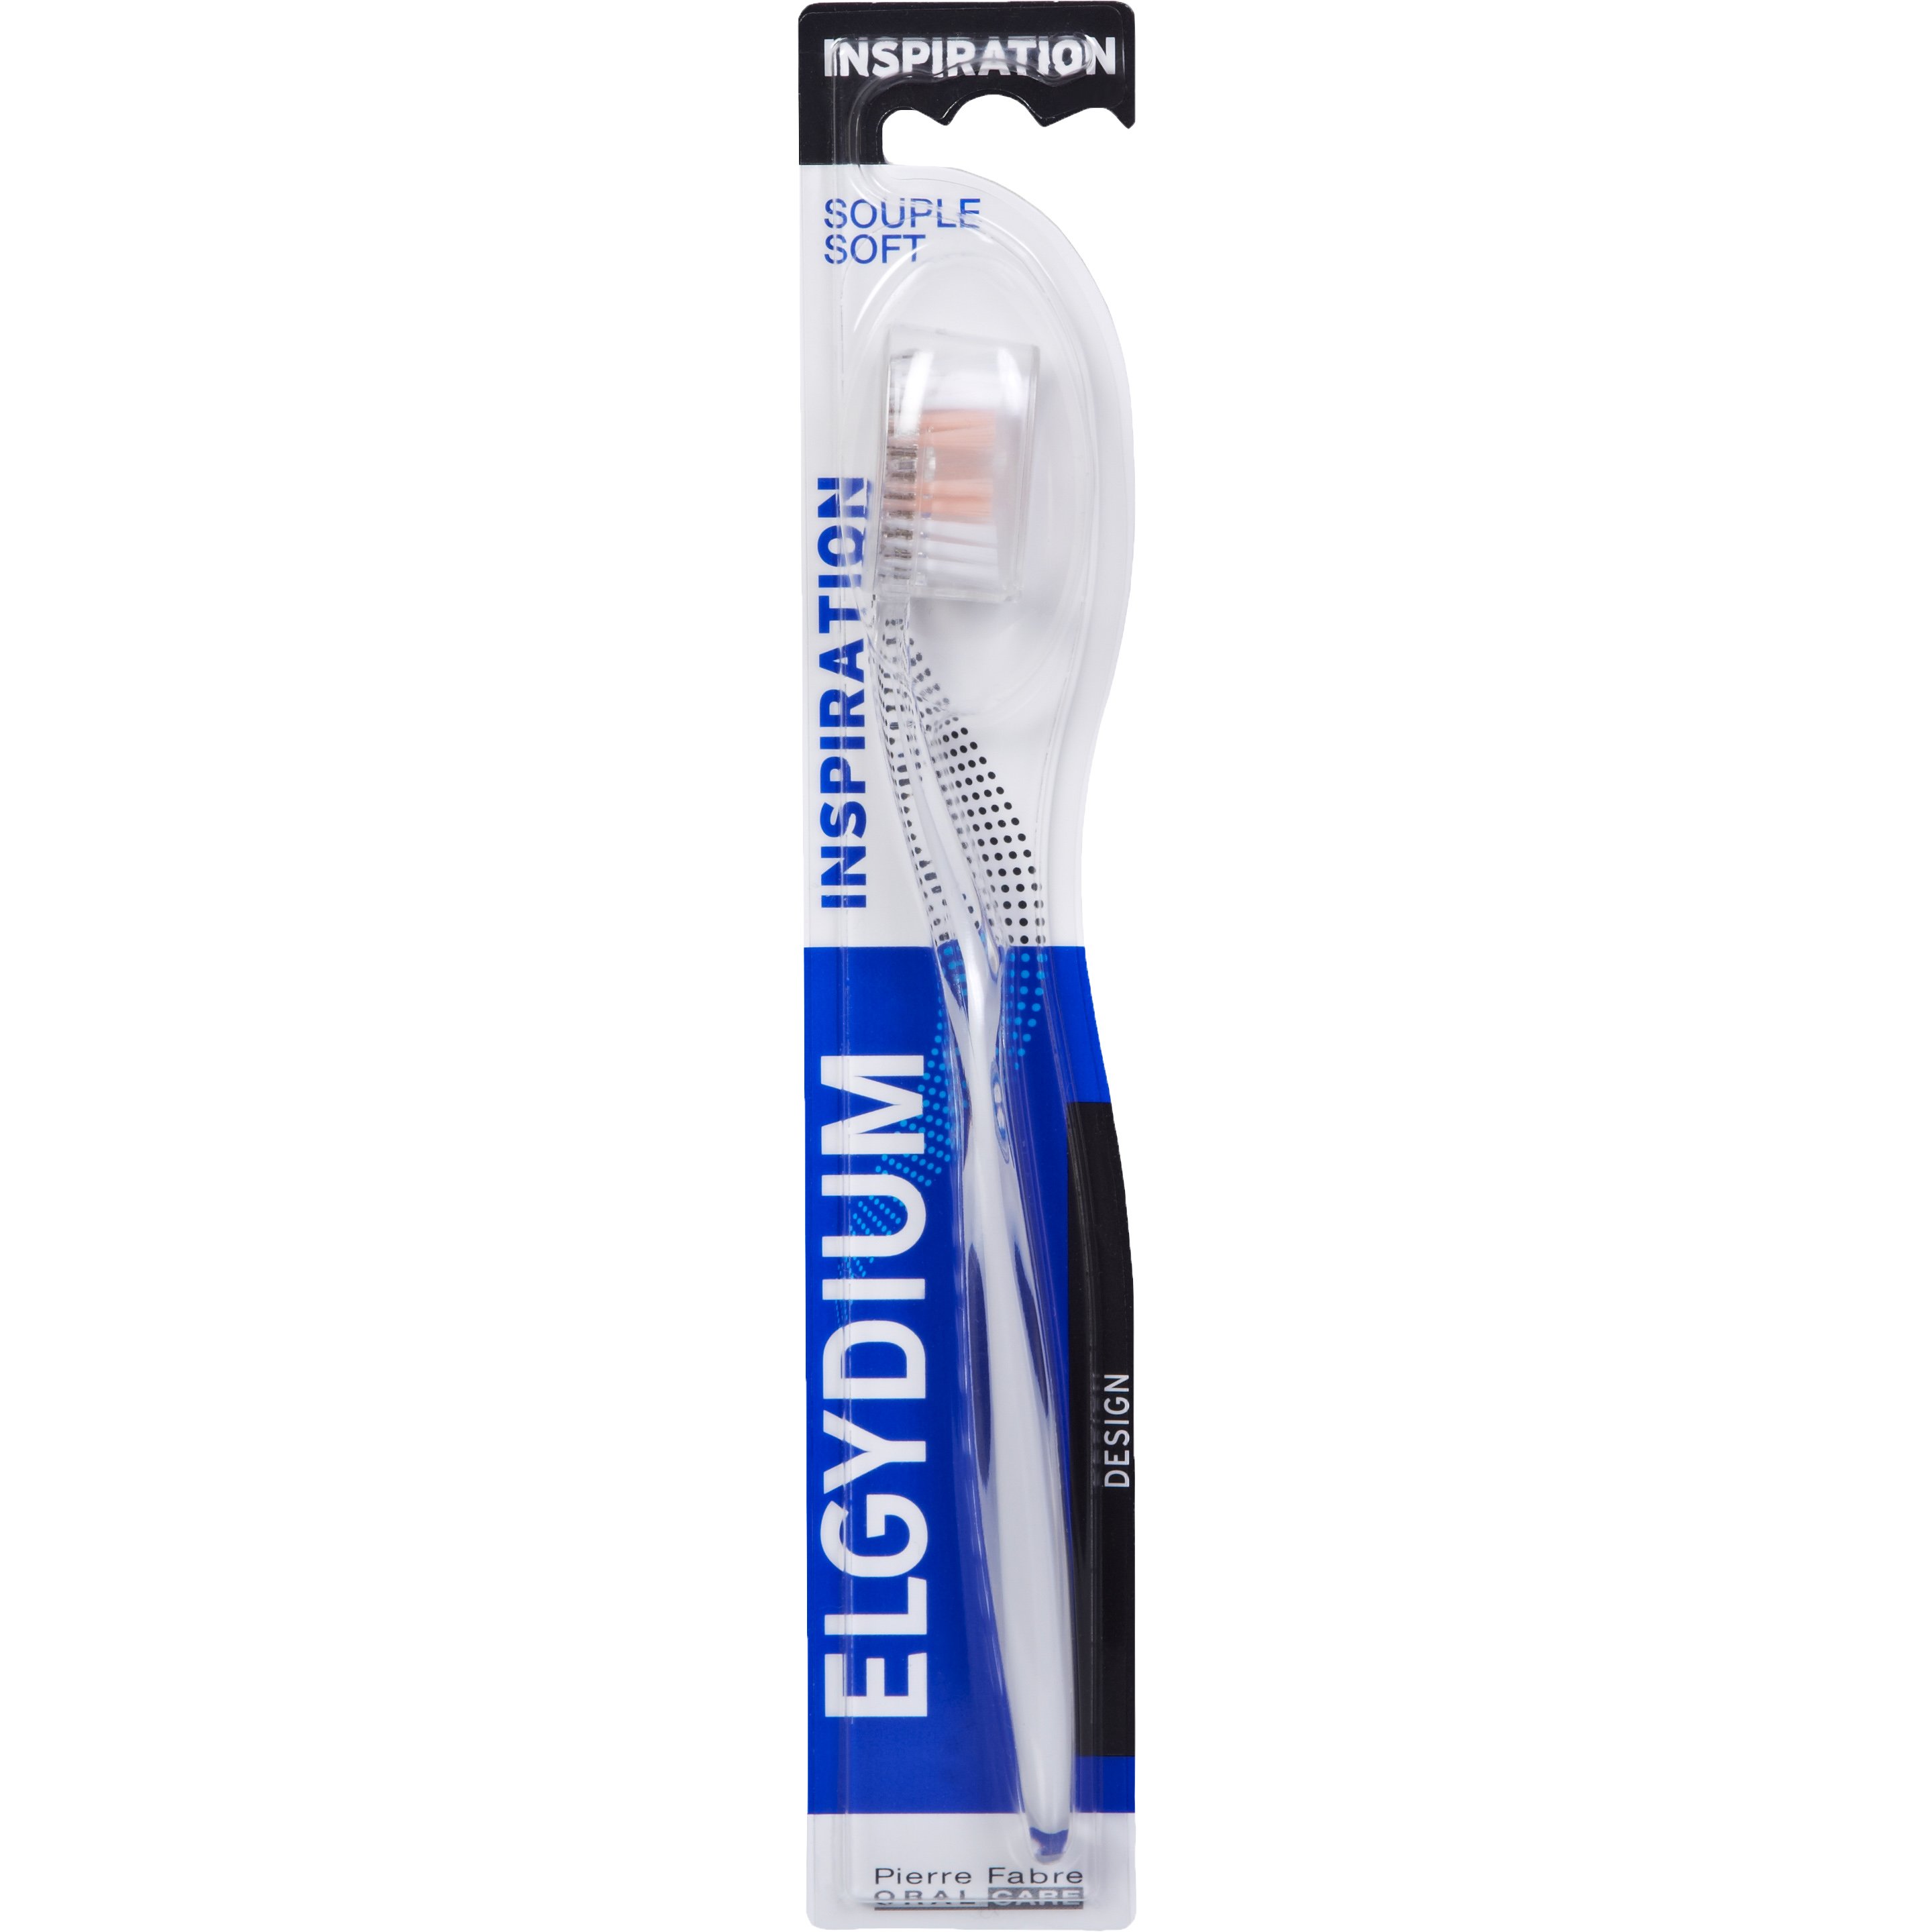 Elgydium Inspiration Medium Εργονομική Οδοντόβουρτσα Για Άνετο Καθαρισμό Και Στα Πιο Δύσκολα Σημεία Μεσαίο Μέγεθος 1 τμχ – άσπρο